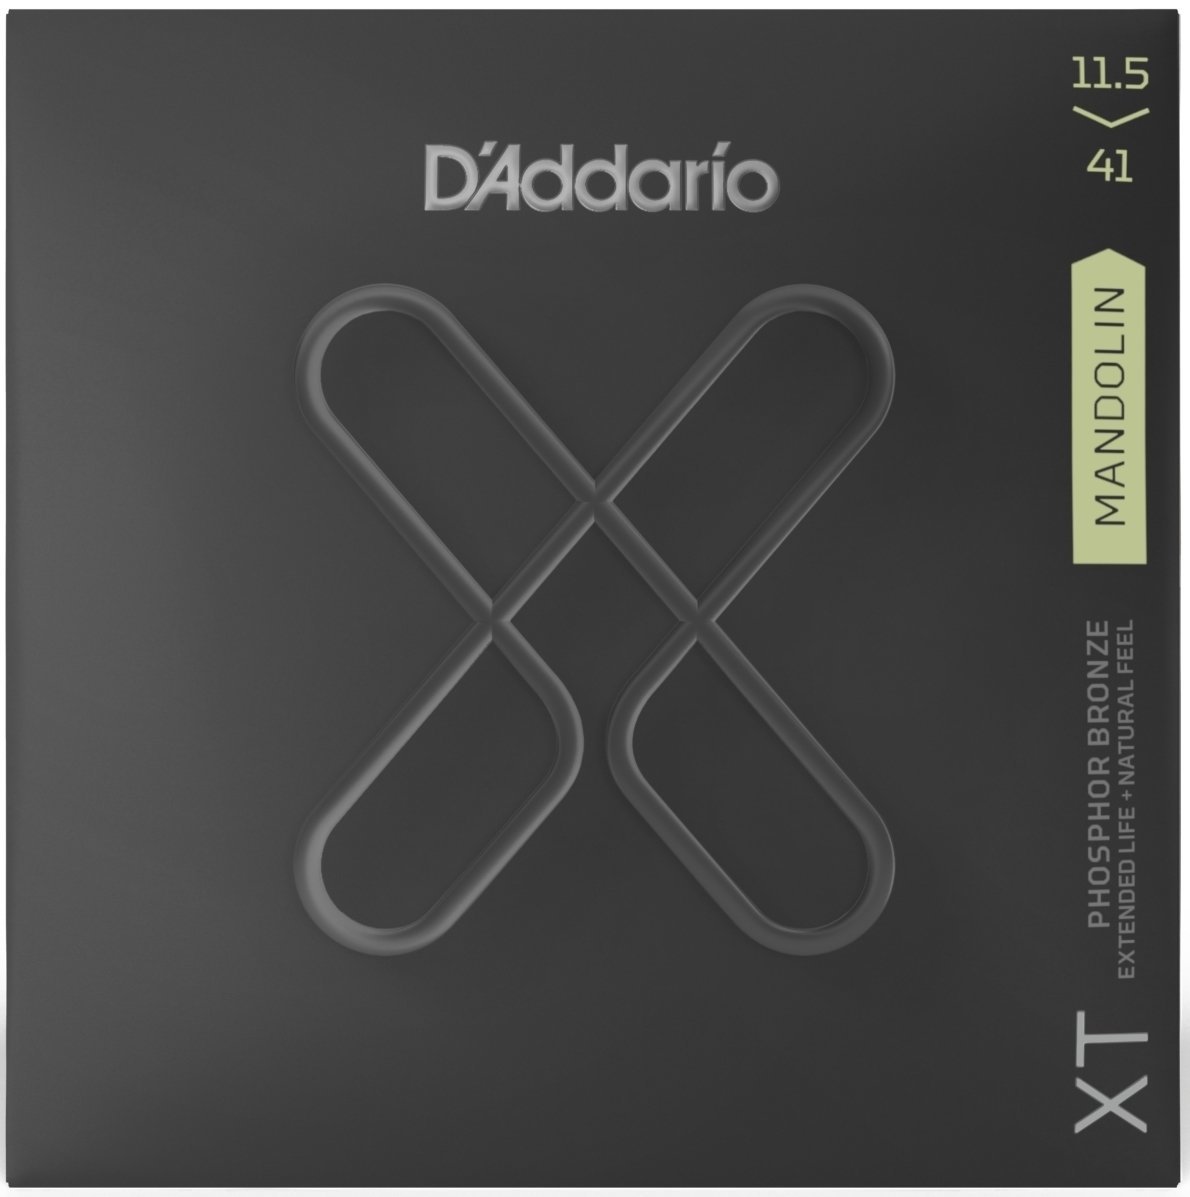 Mandoline Strings D'Addario XTM11541